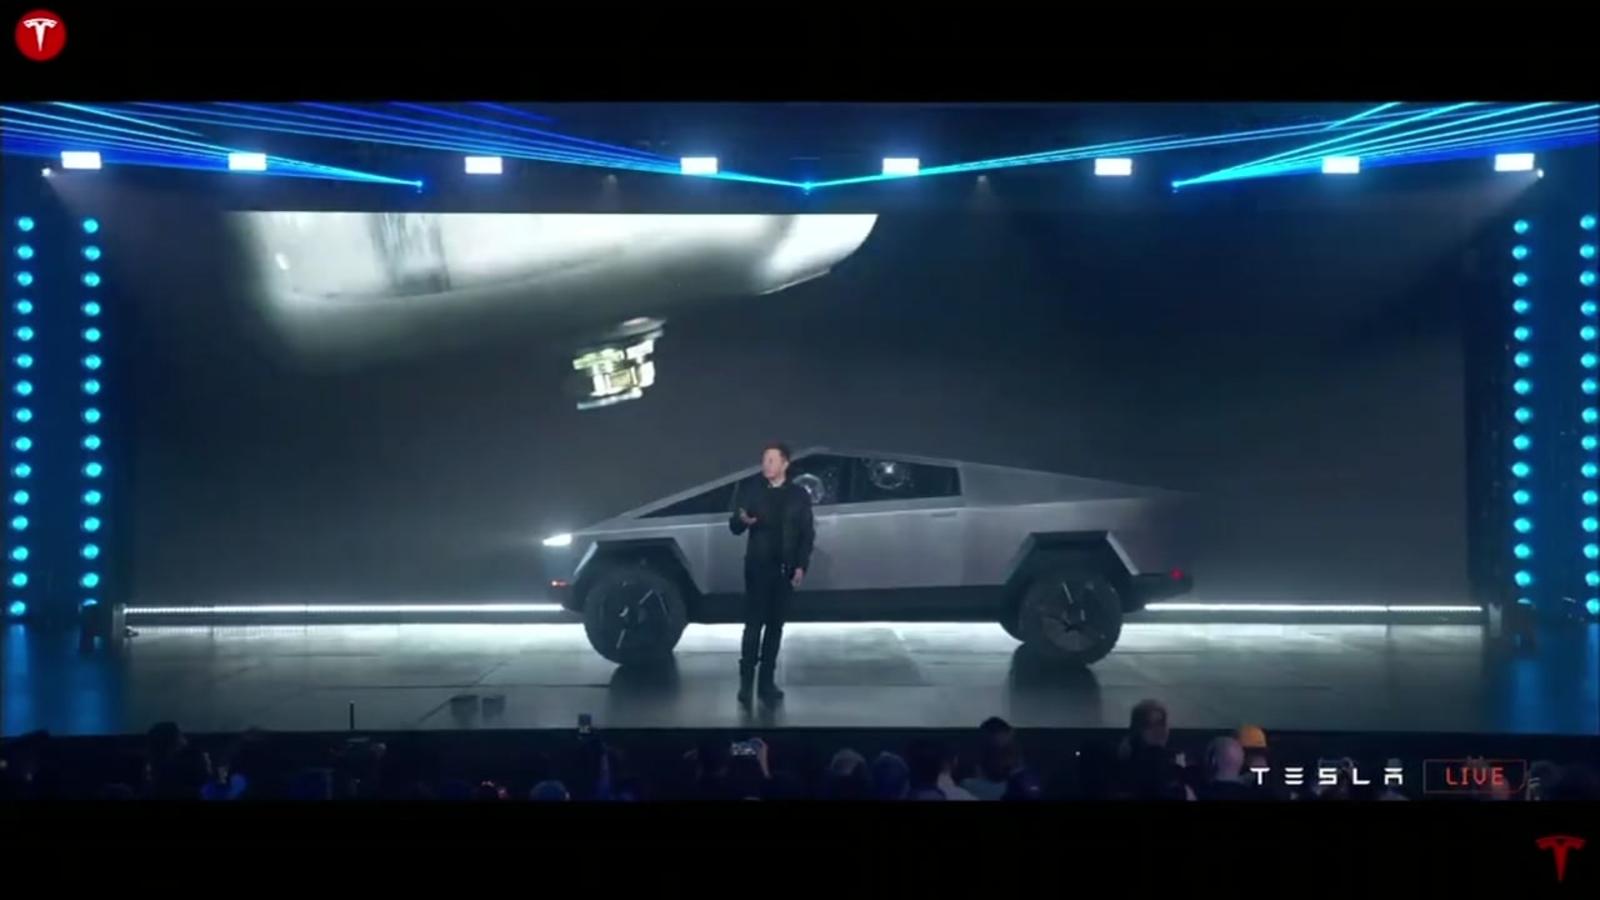 Elon Musk reveals thousands want to buy his new Tesla Cybertruck